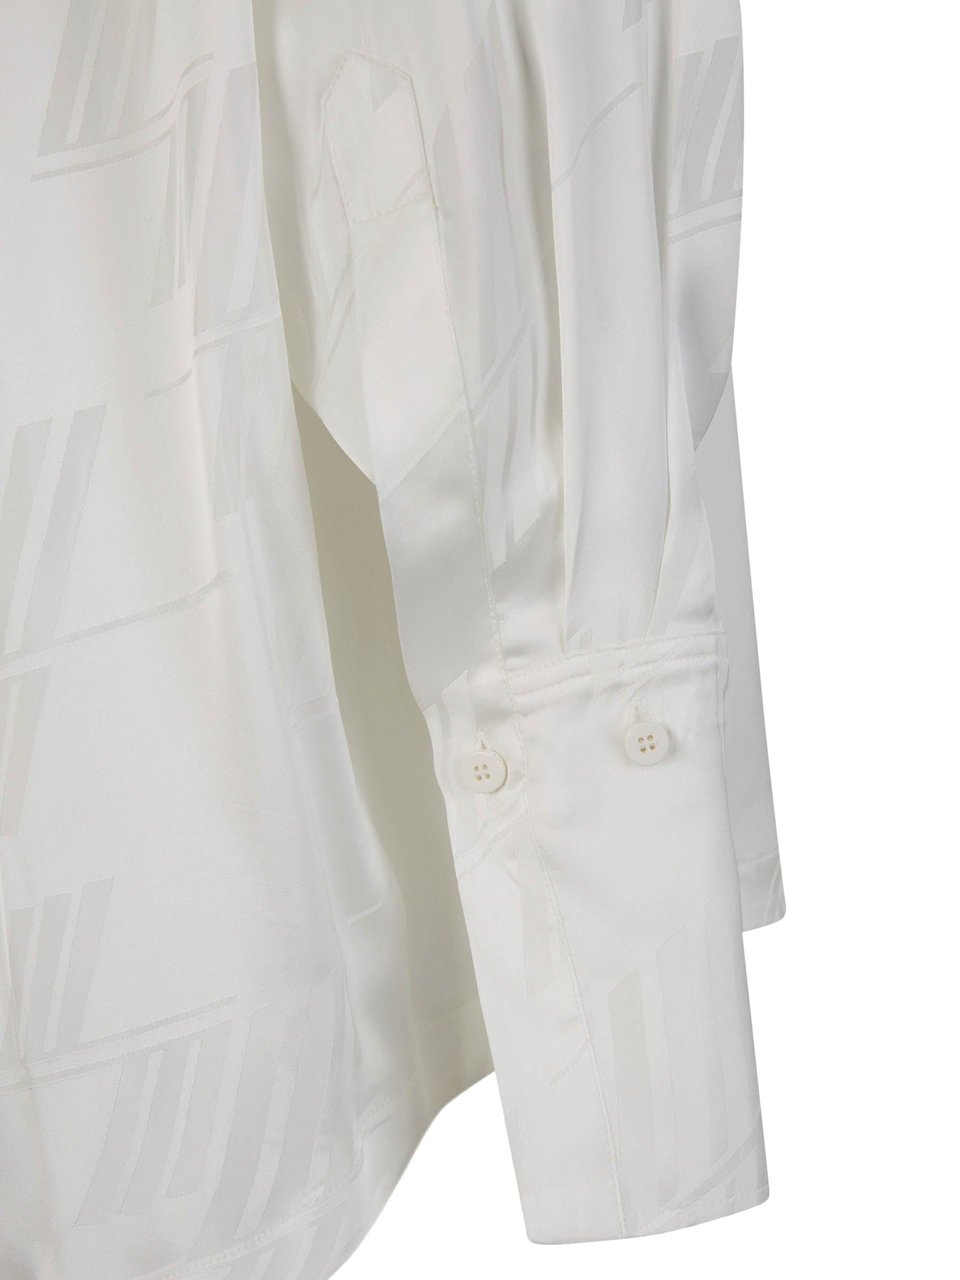 The Attico diana shirt white Wit